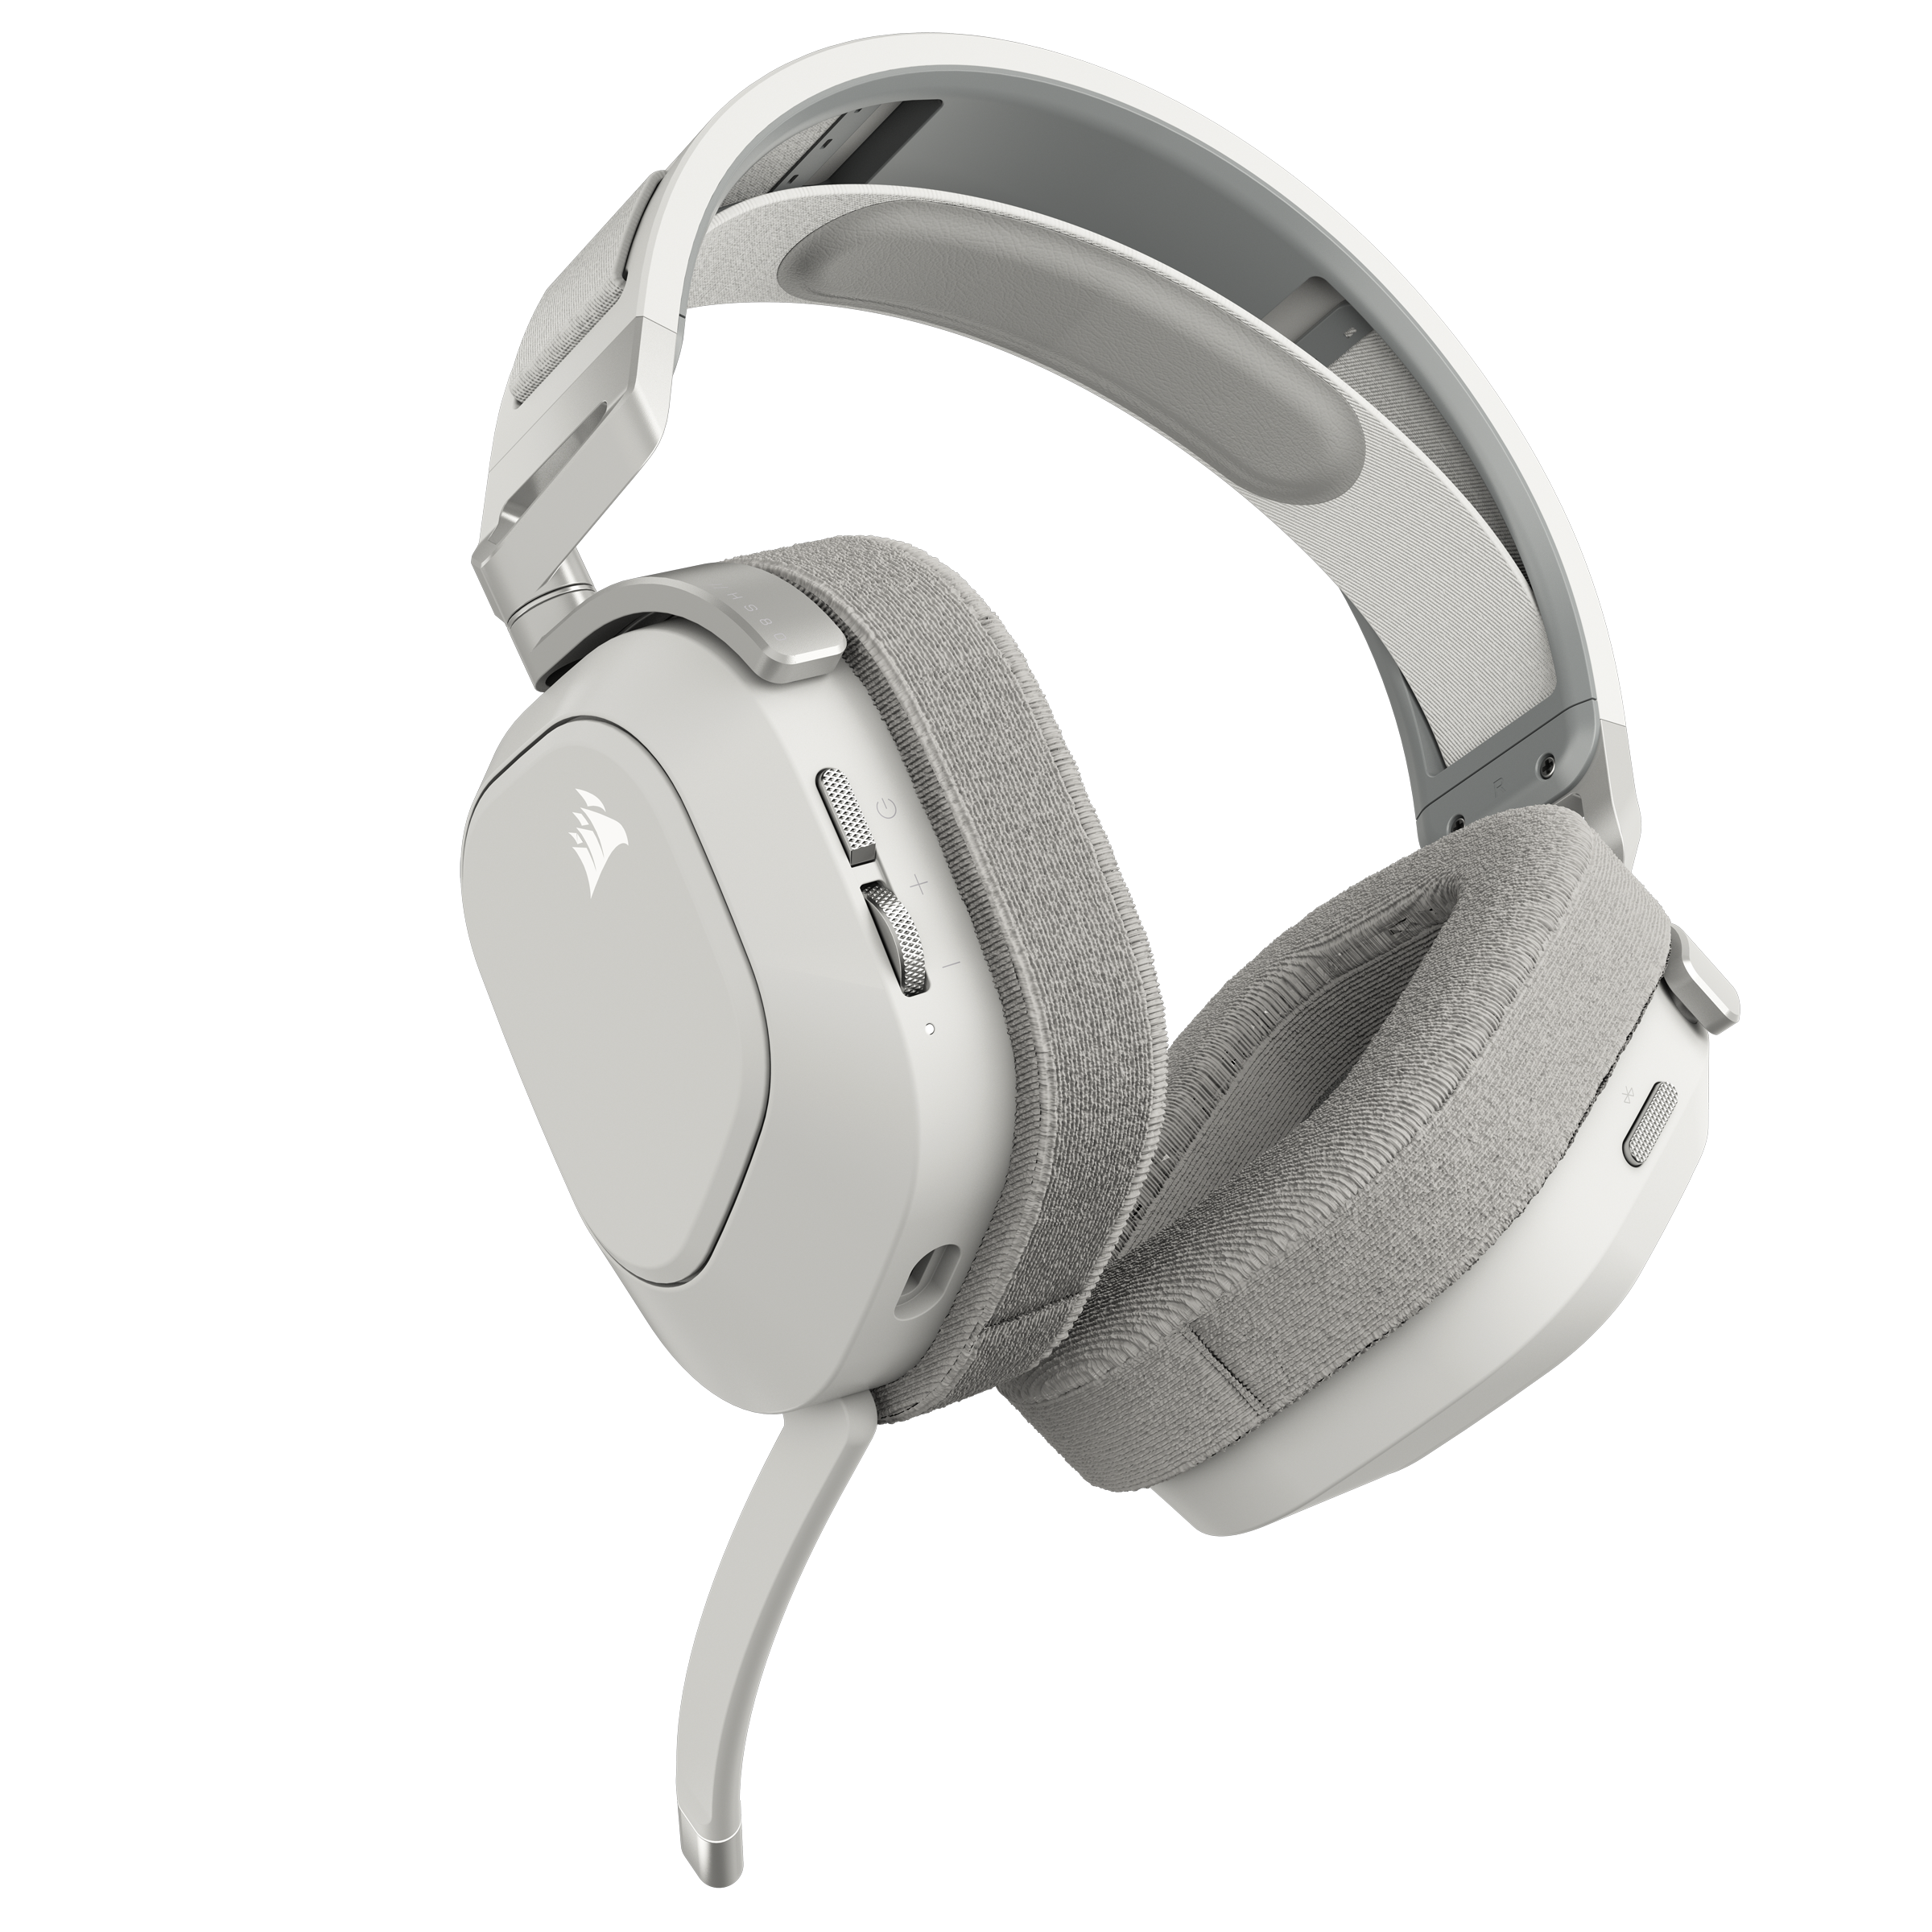 Corsair Gaming-Headset »HS80 MAX Wireless«, Kabelloses Gaming-Headset